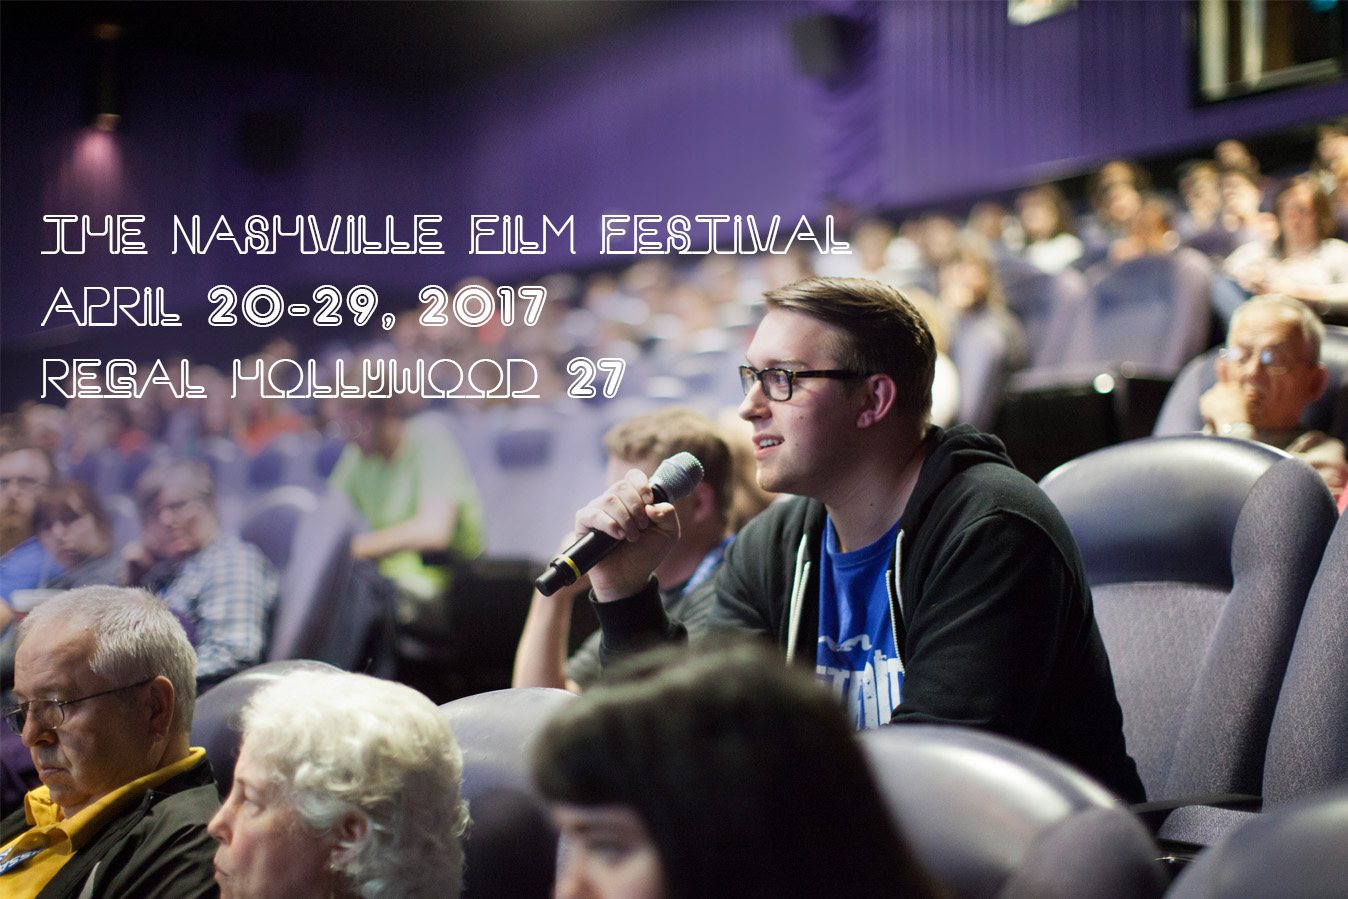 Nashville Film Festival | May 10-19, 2018 | Regal Hollywood 27 Cinema Nashville Film ...1348 x 899